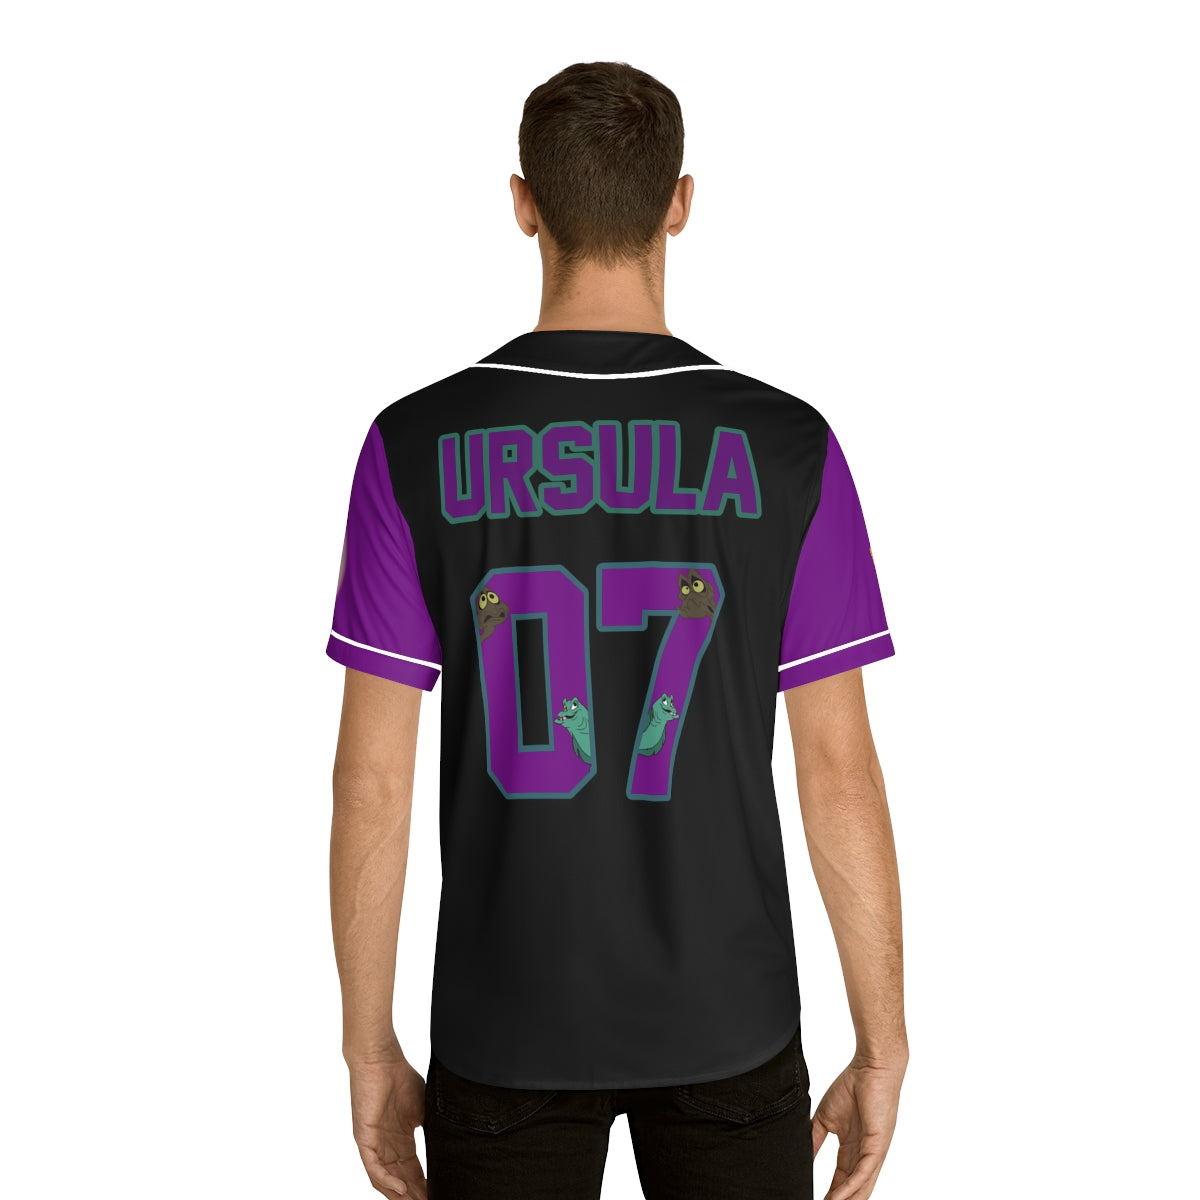 Ursula Jersey